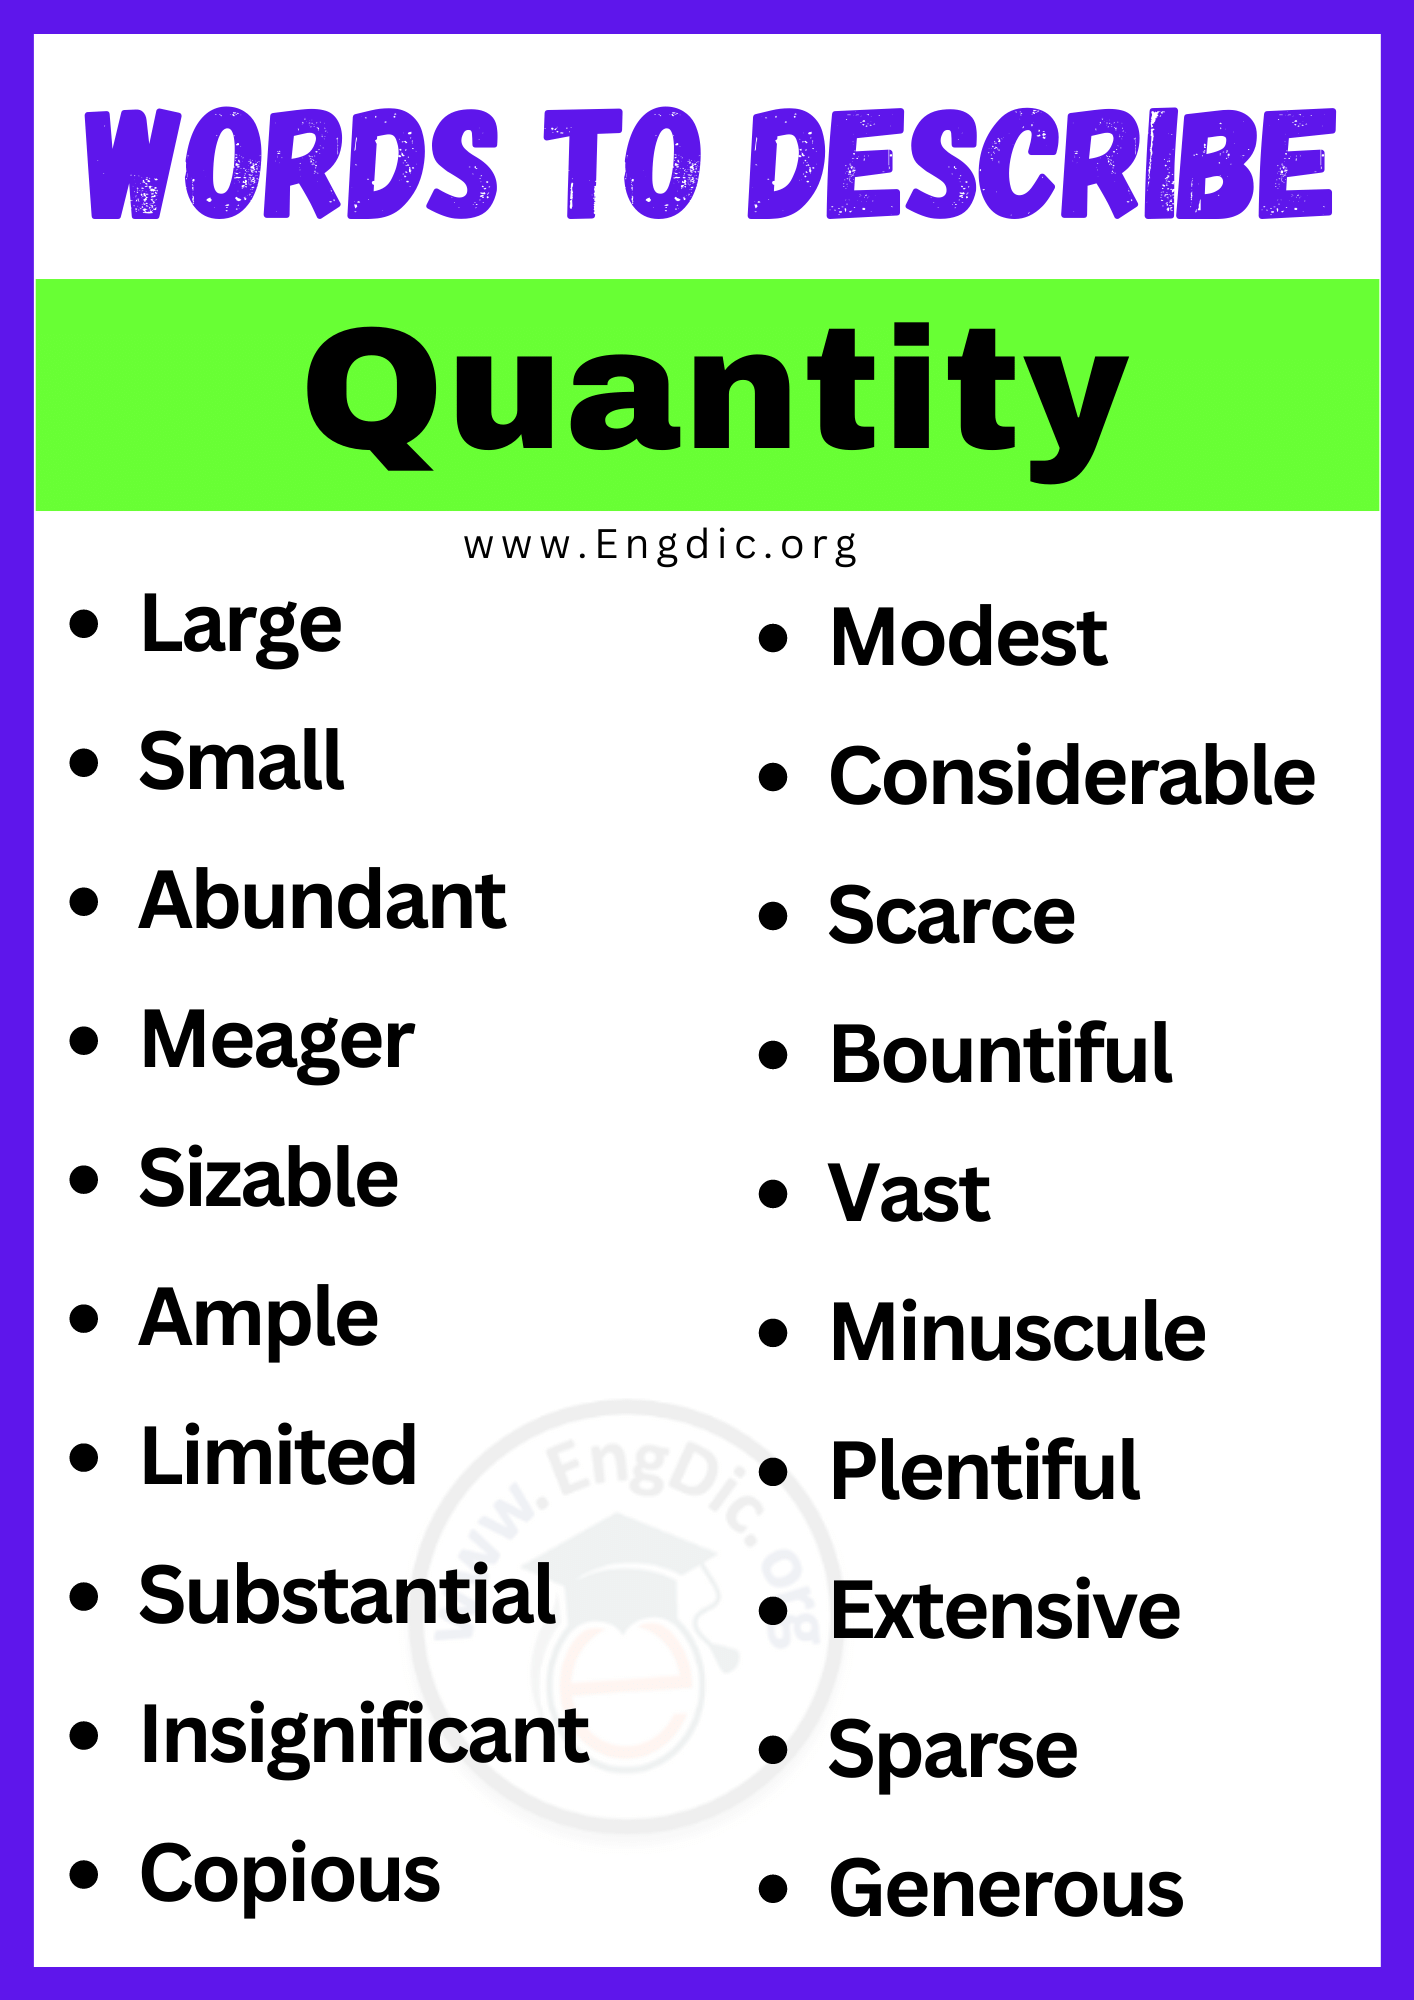 Words to Describe Quantity